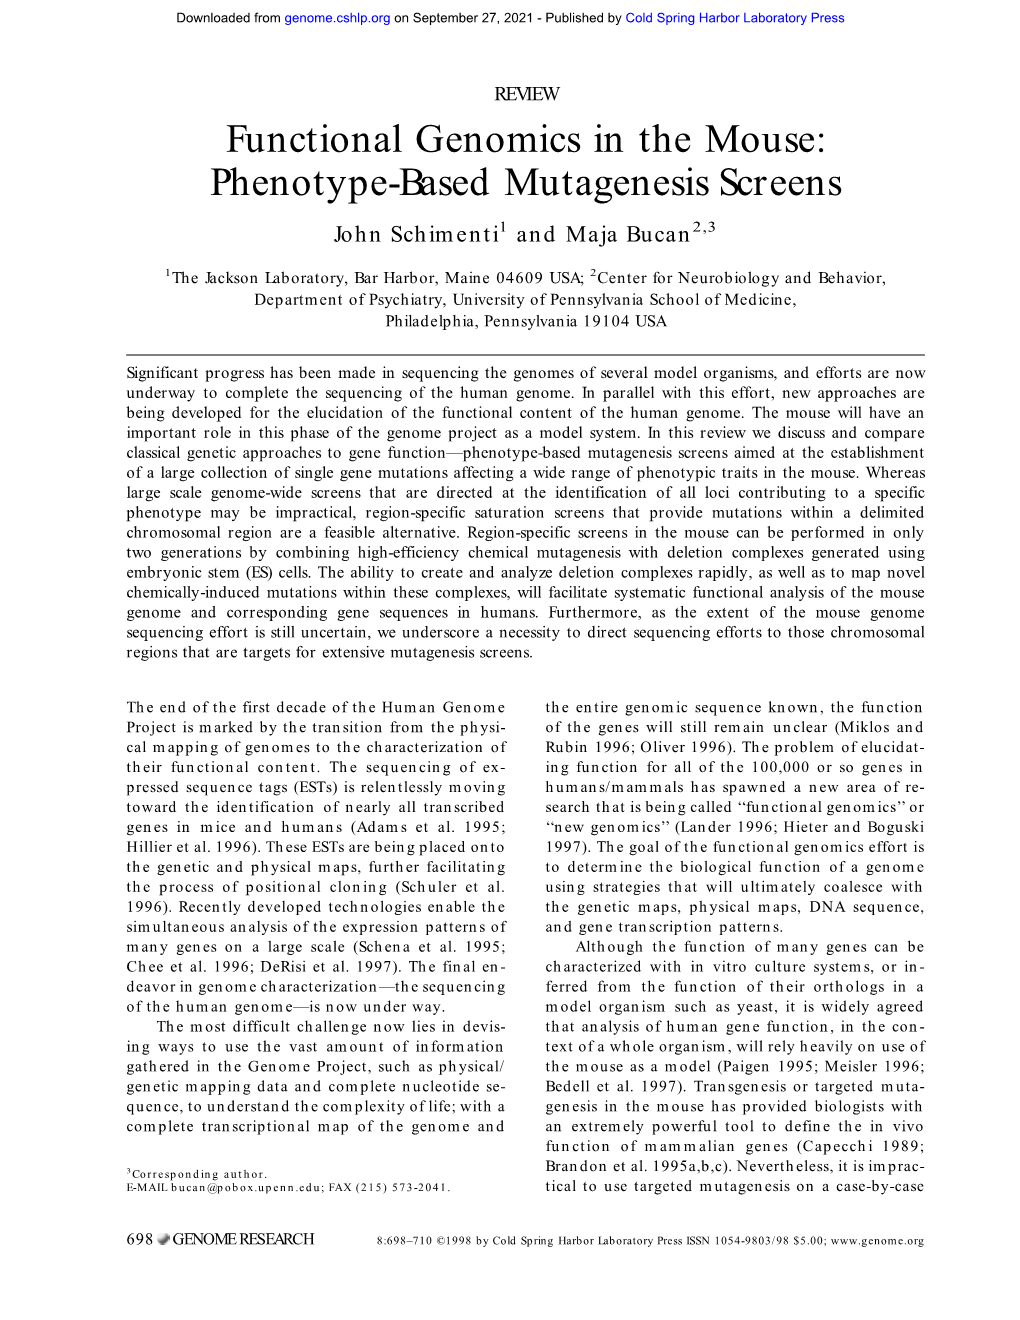 Functional Genomics in the Mouse: Phenotype-Based Mutagenesis Screens John Schimenti1 and Maja Bucan2,3